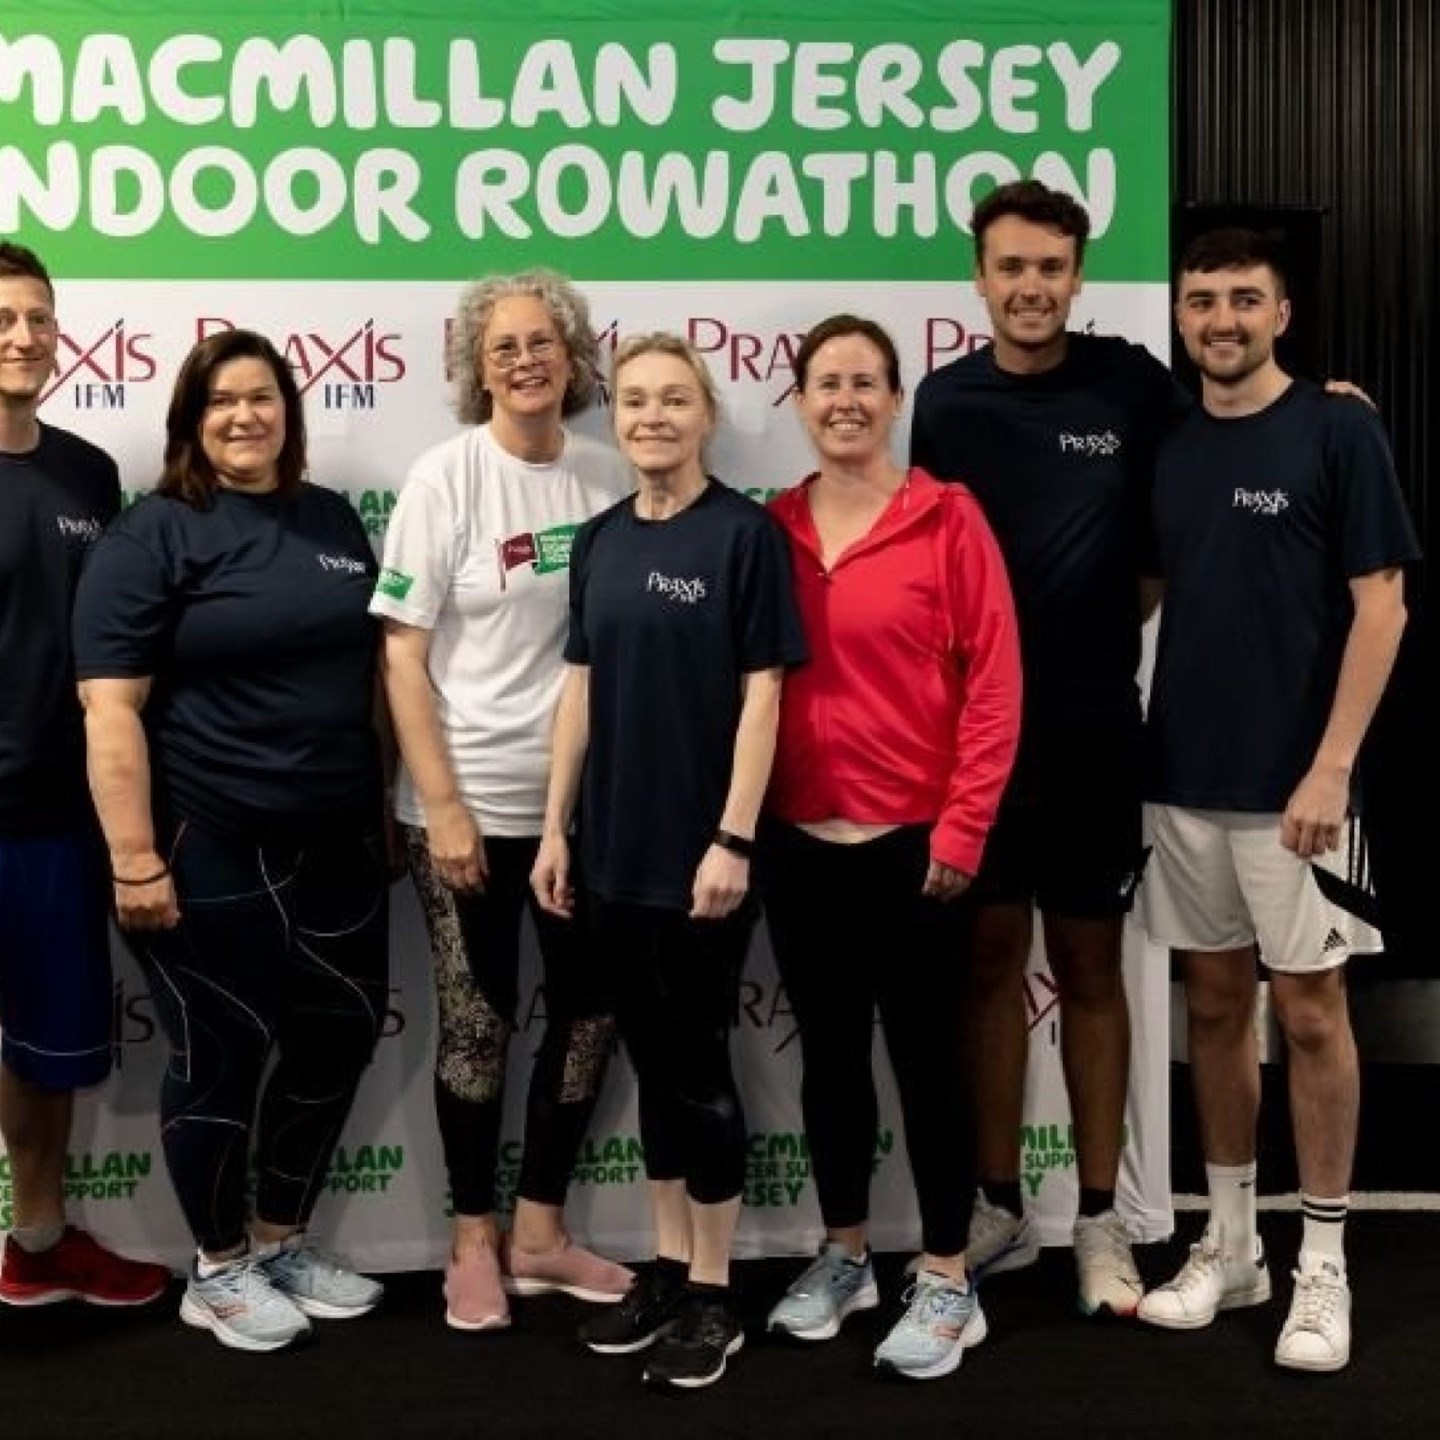 7 members of the Jersey team take on the Macmillan Jersey Indoor Rowathon